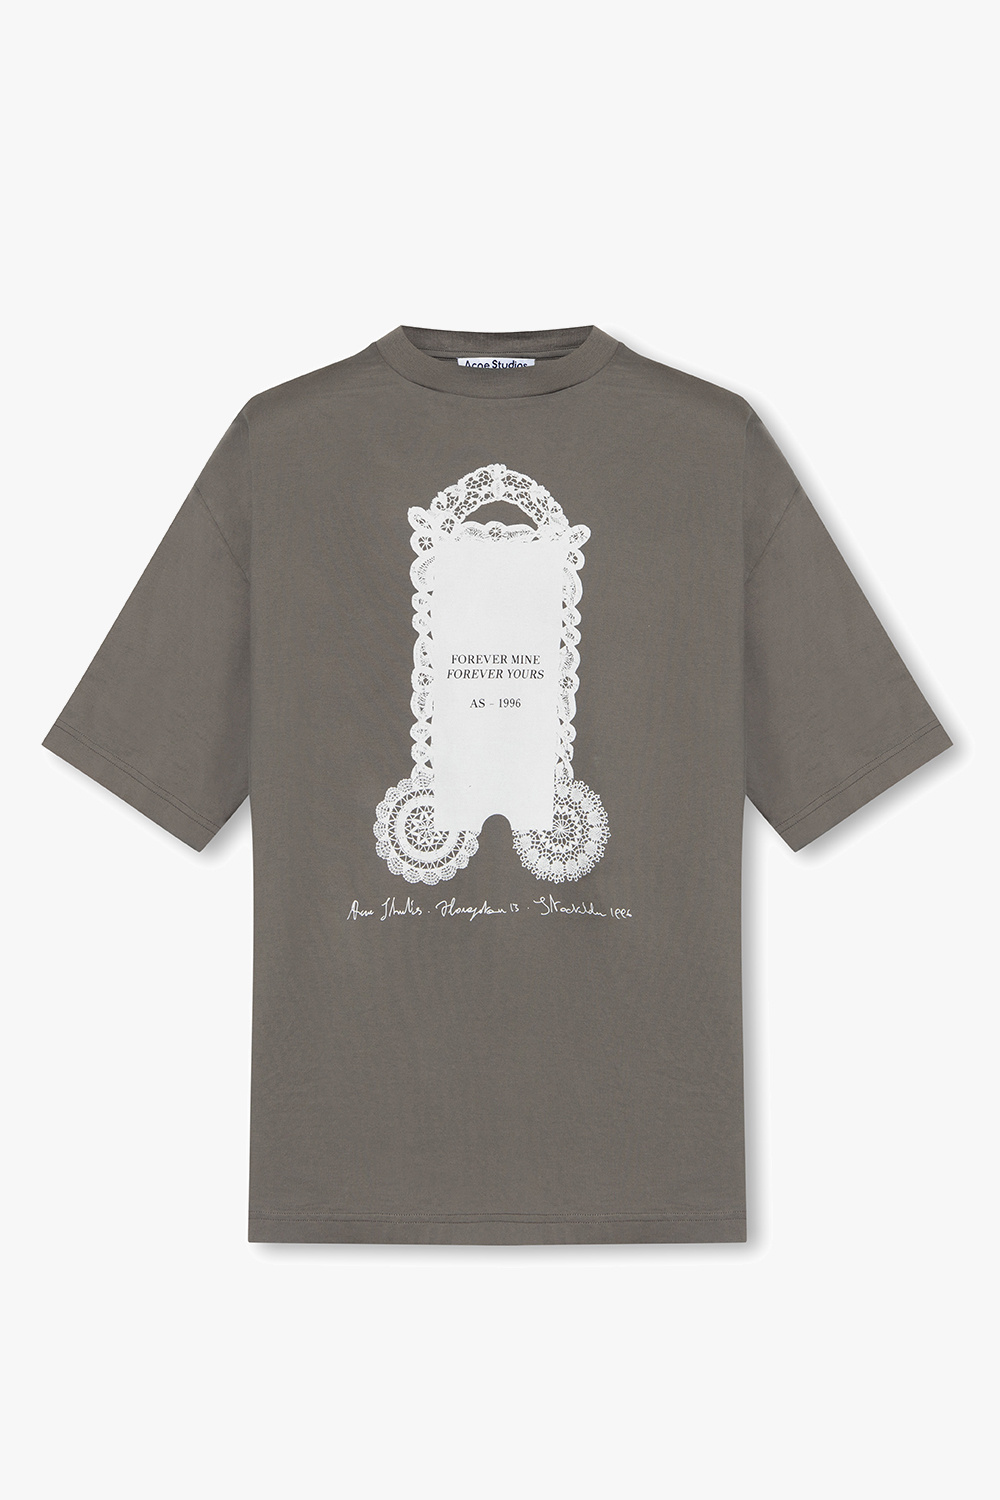 Blackie Fn - Louis Vuitton T-Shirt Size: S - XXL Price